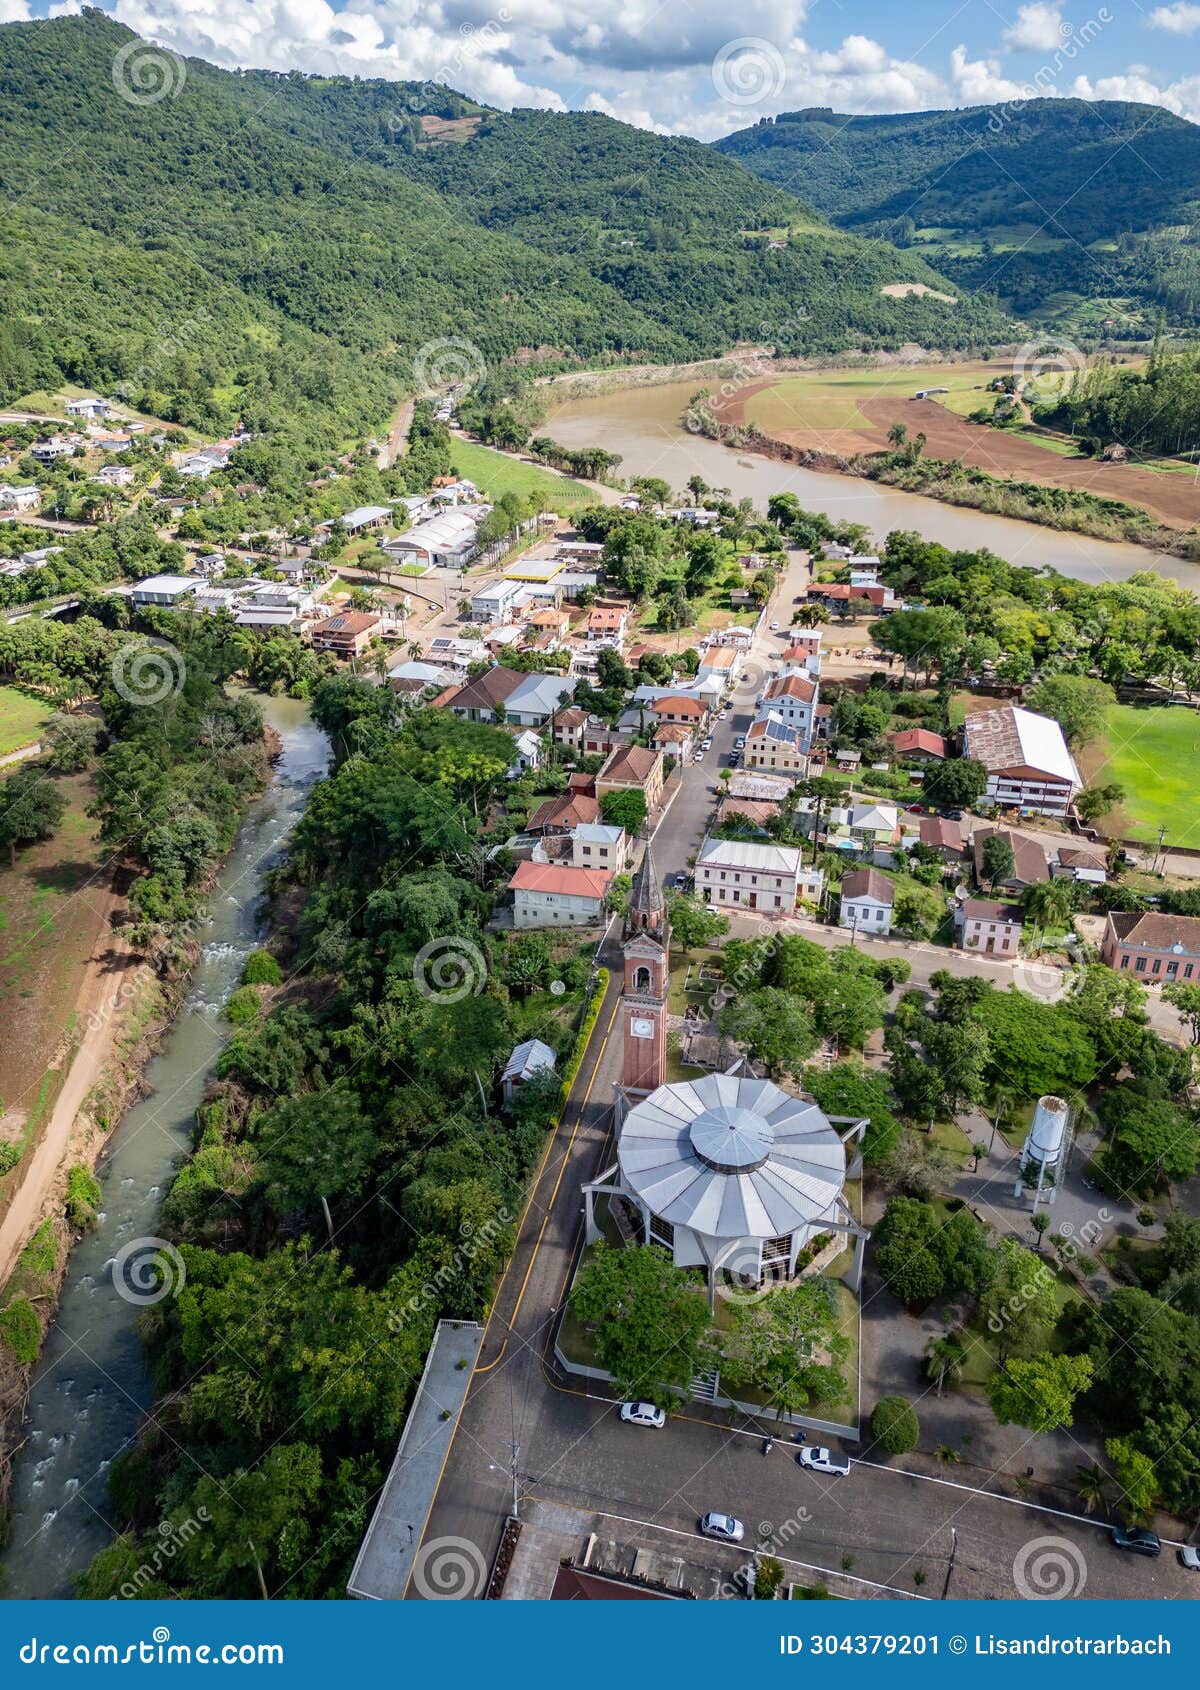 aerial view of santa tereza village